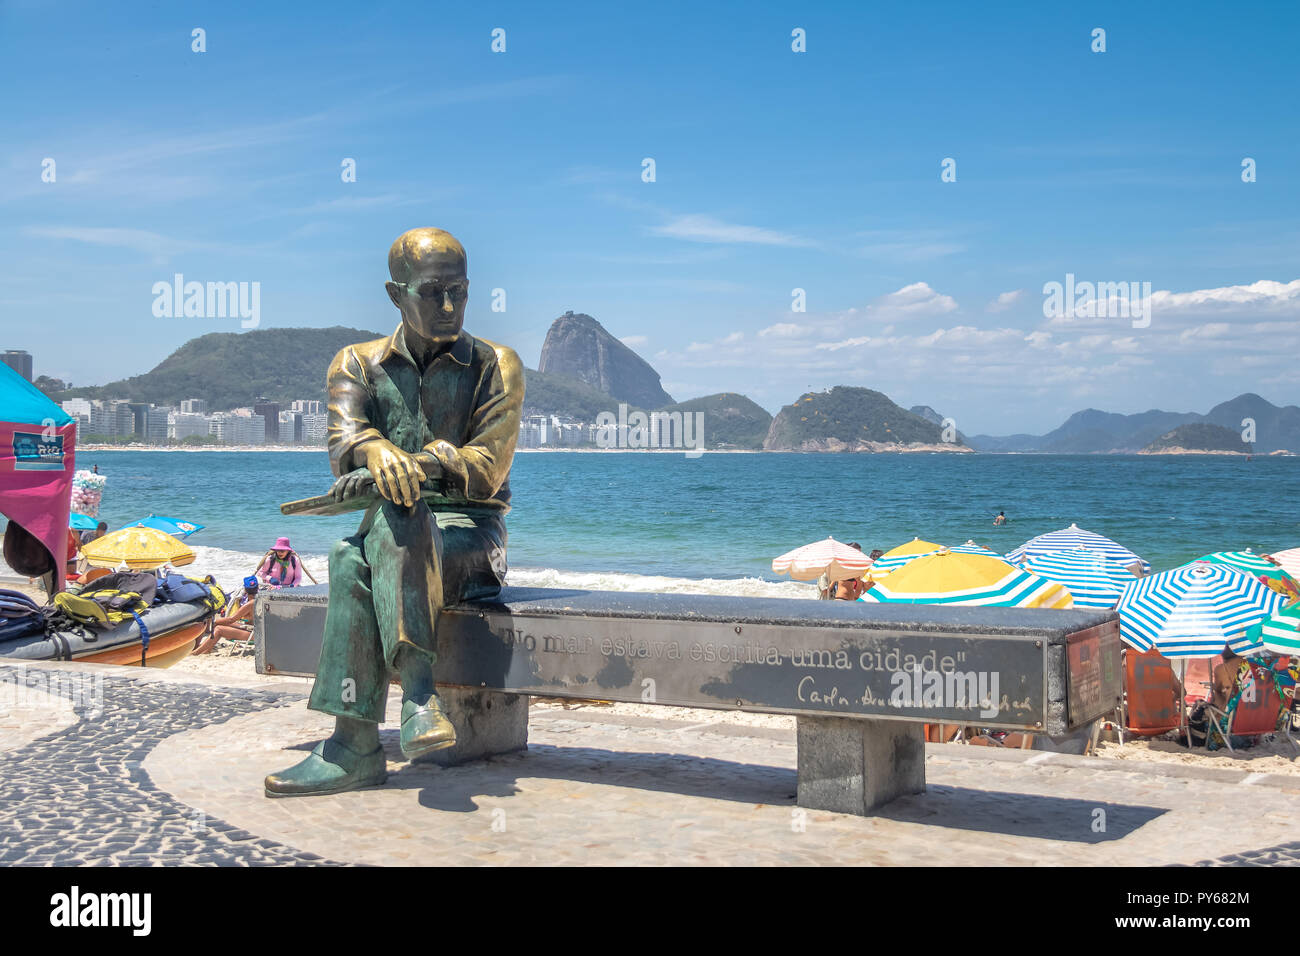 Carlos Drummond de Andrade Statue at Copacabana Beach with Sugar Loaf Mountain on background - Rio de Janeiro, Brazil Stock Photo